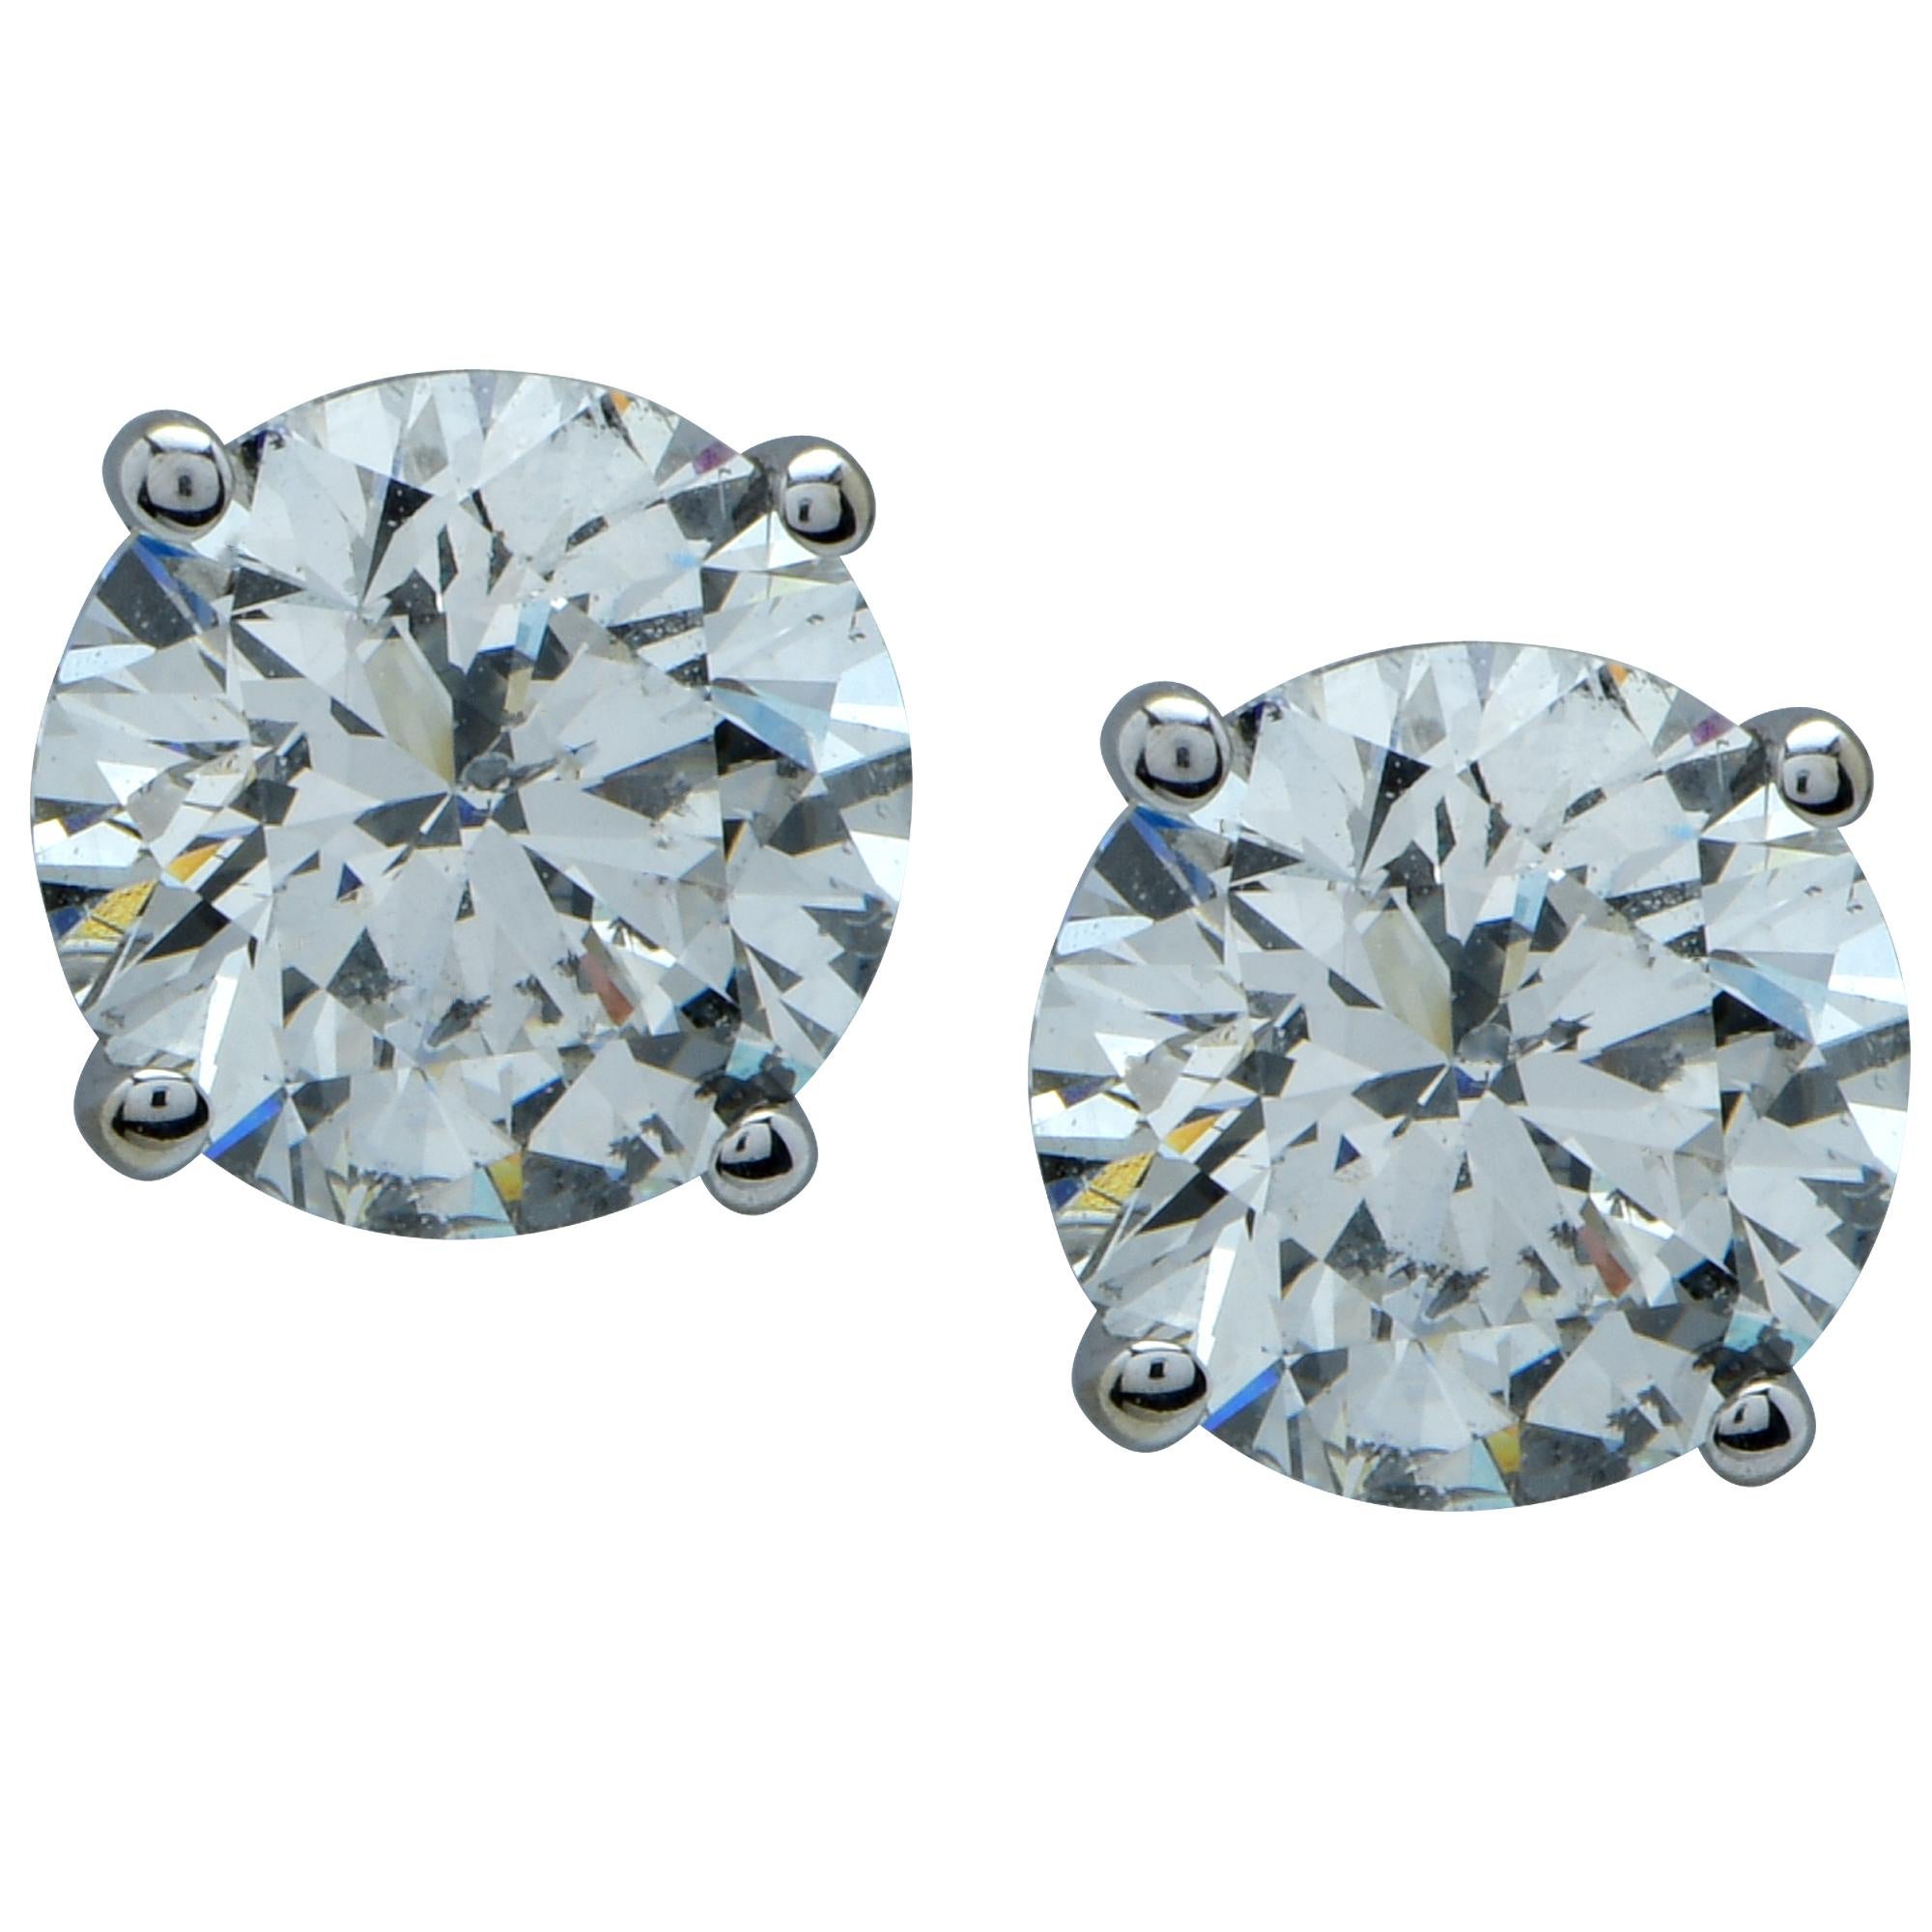 Round Cut Vivid Diamonds GIA Graded 6.96 Carat Diamond Solitaire Earrings